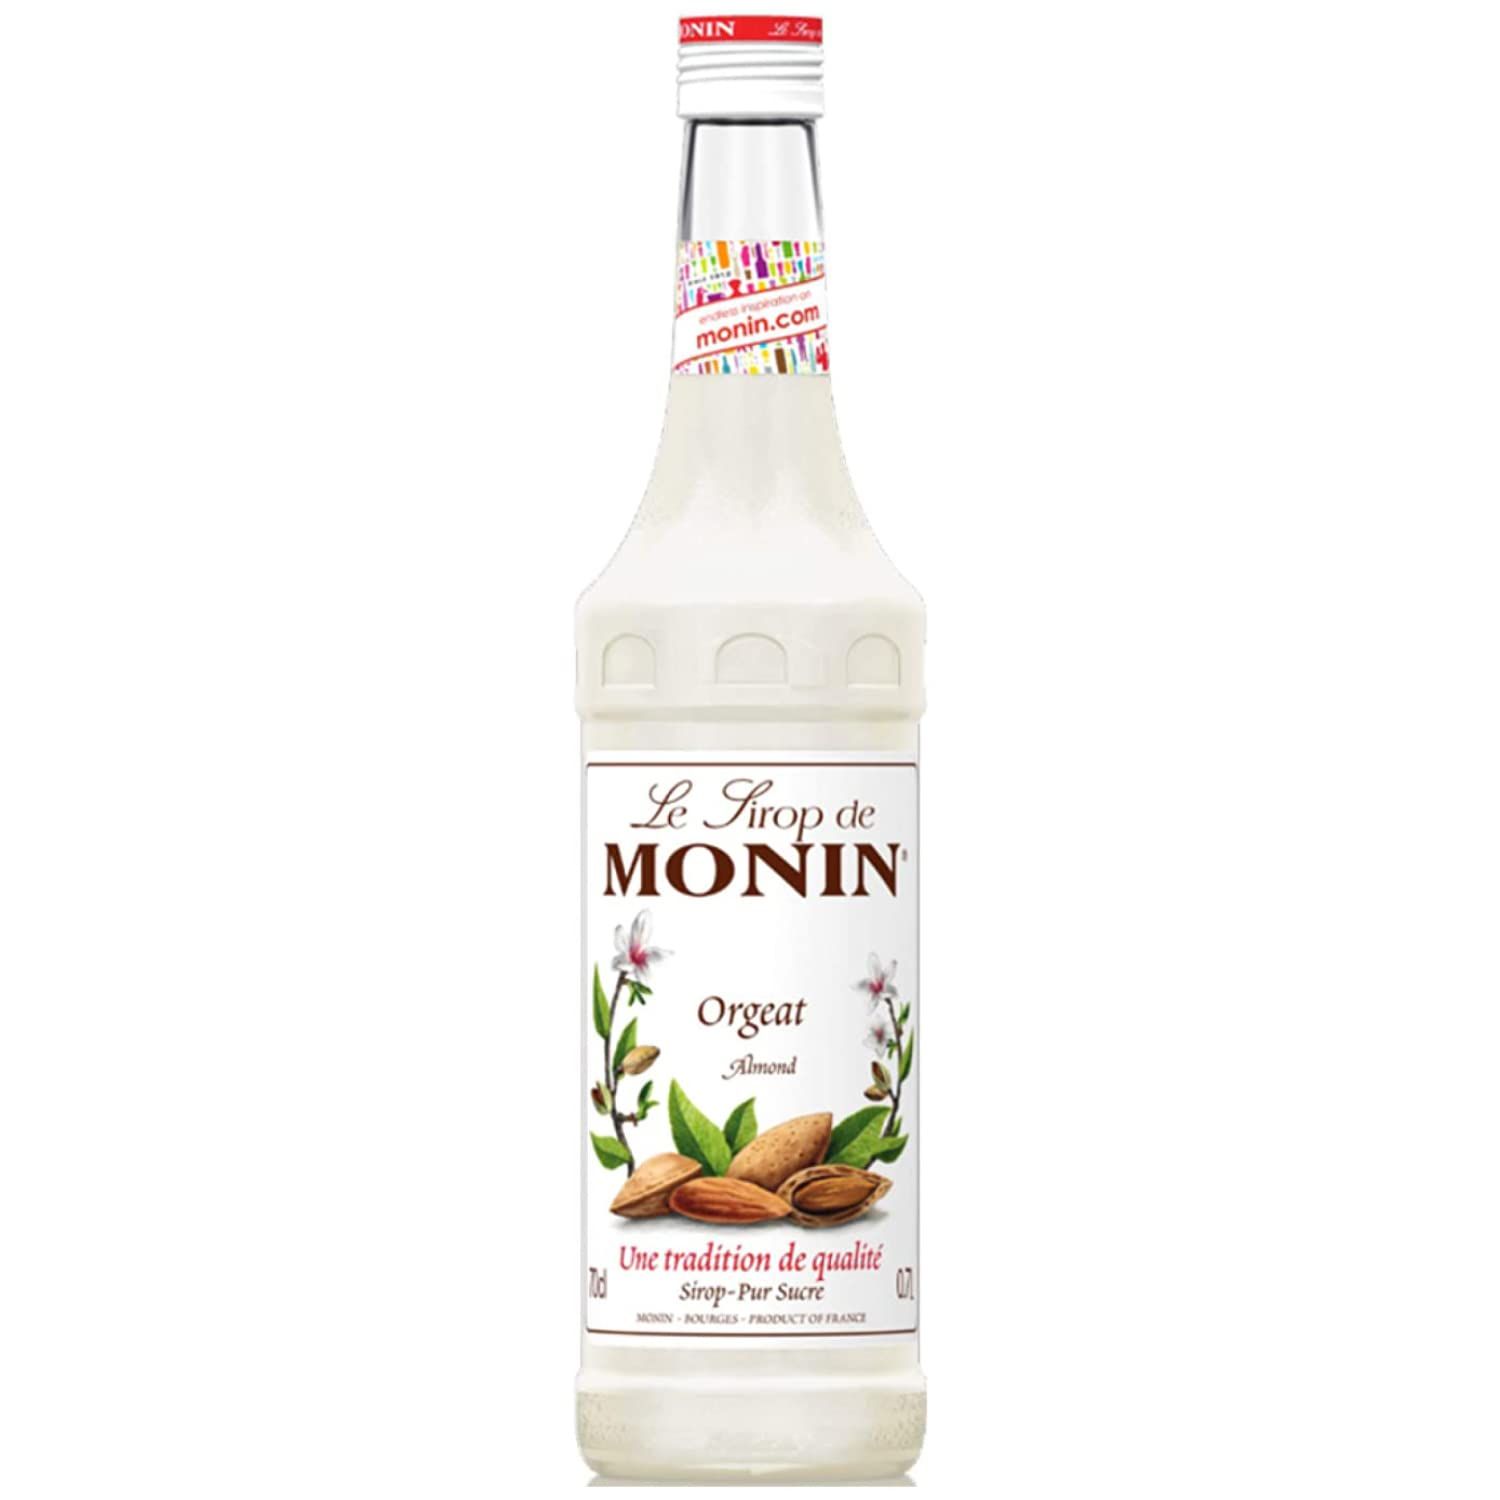 Monin Almond Bottle Image